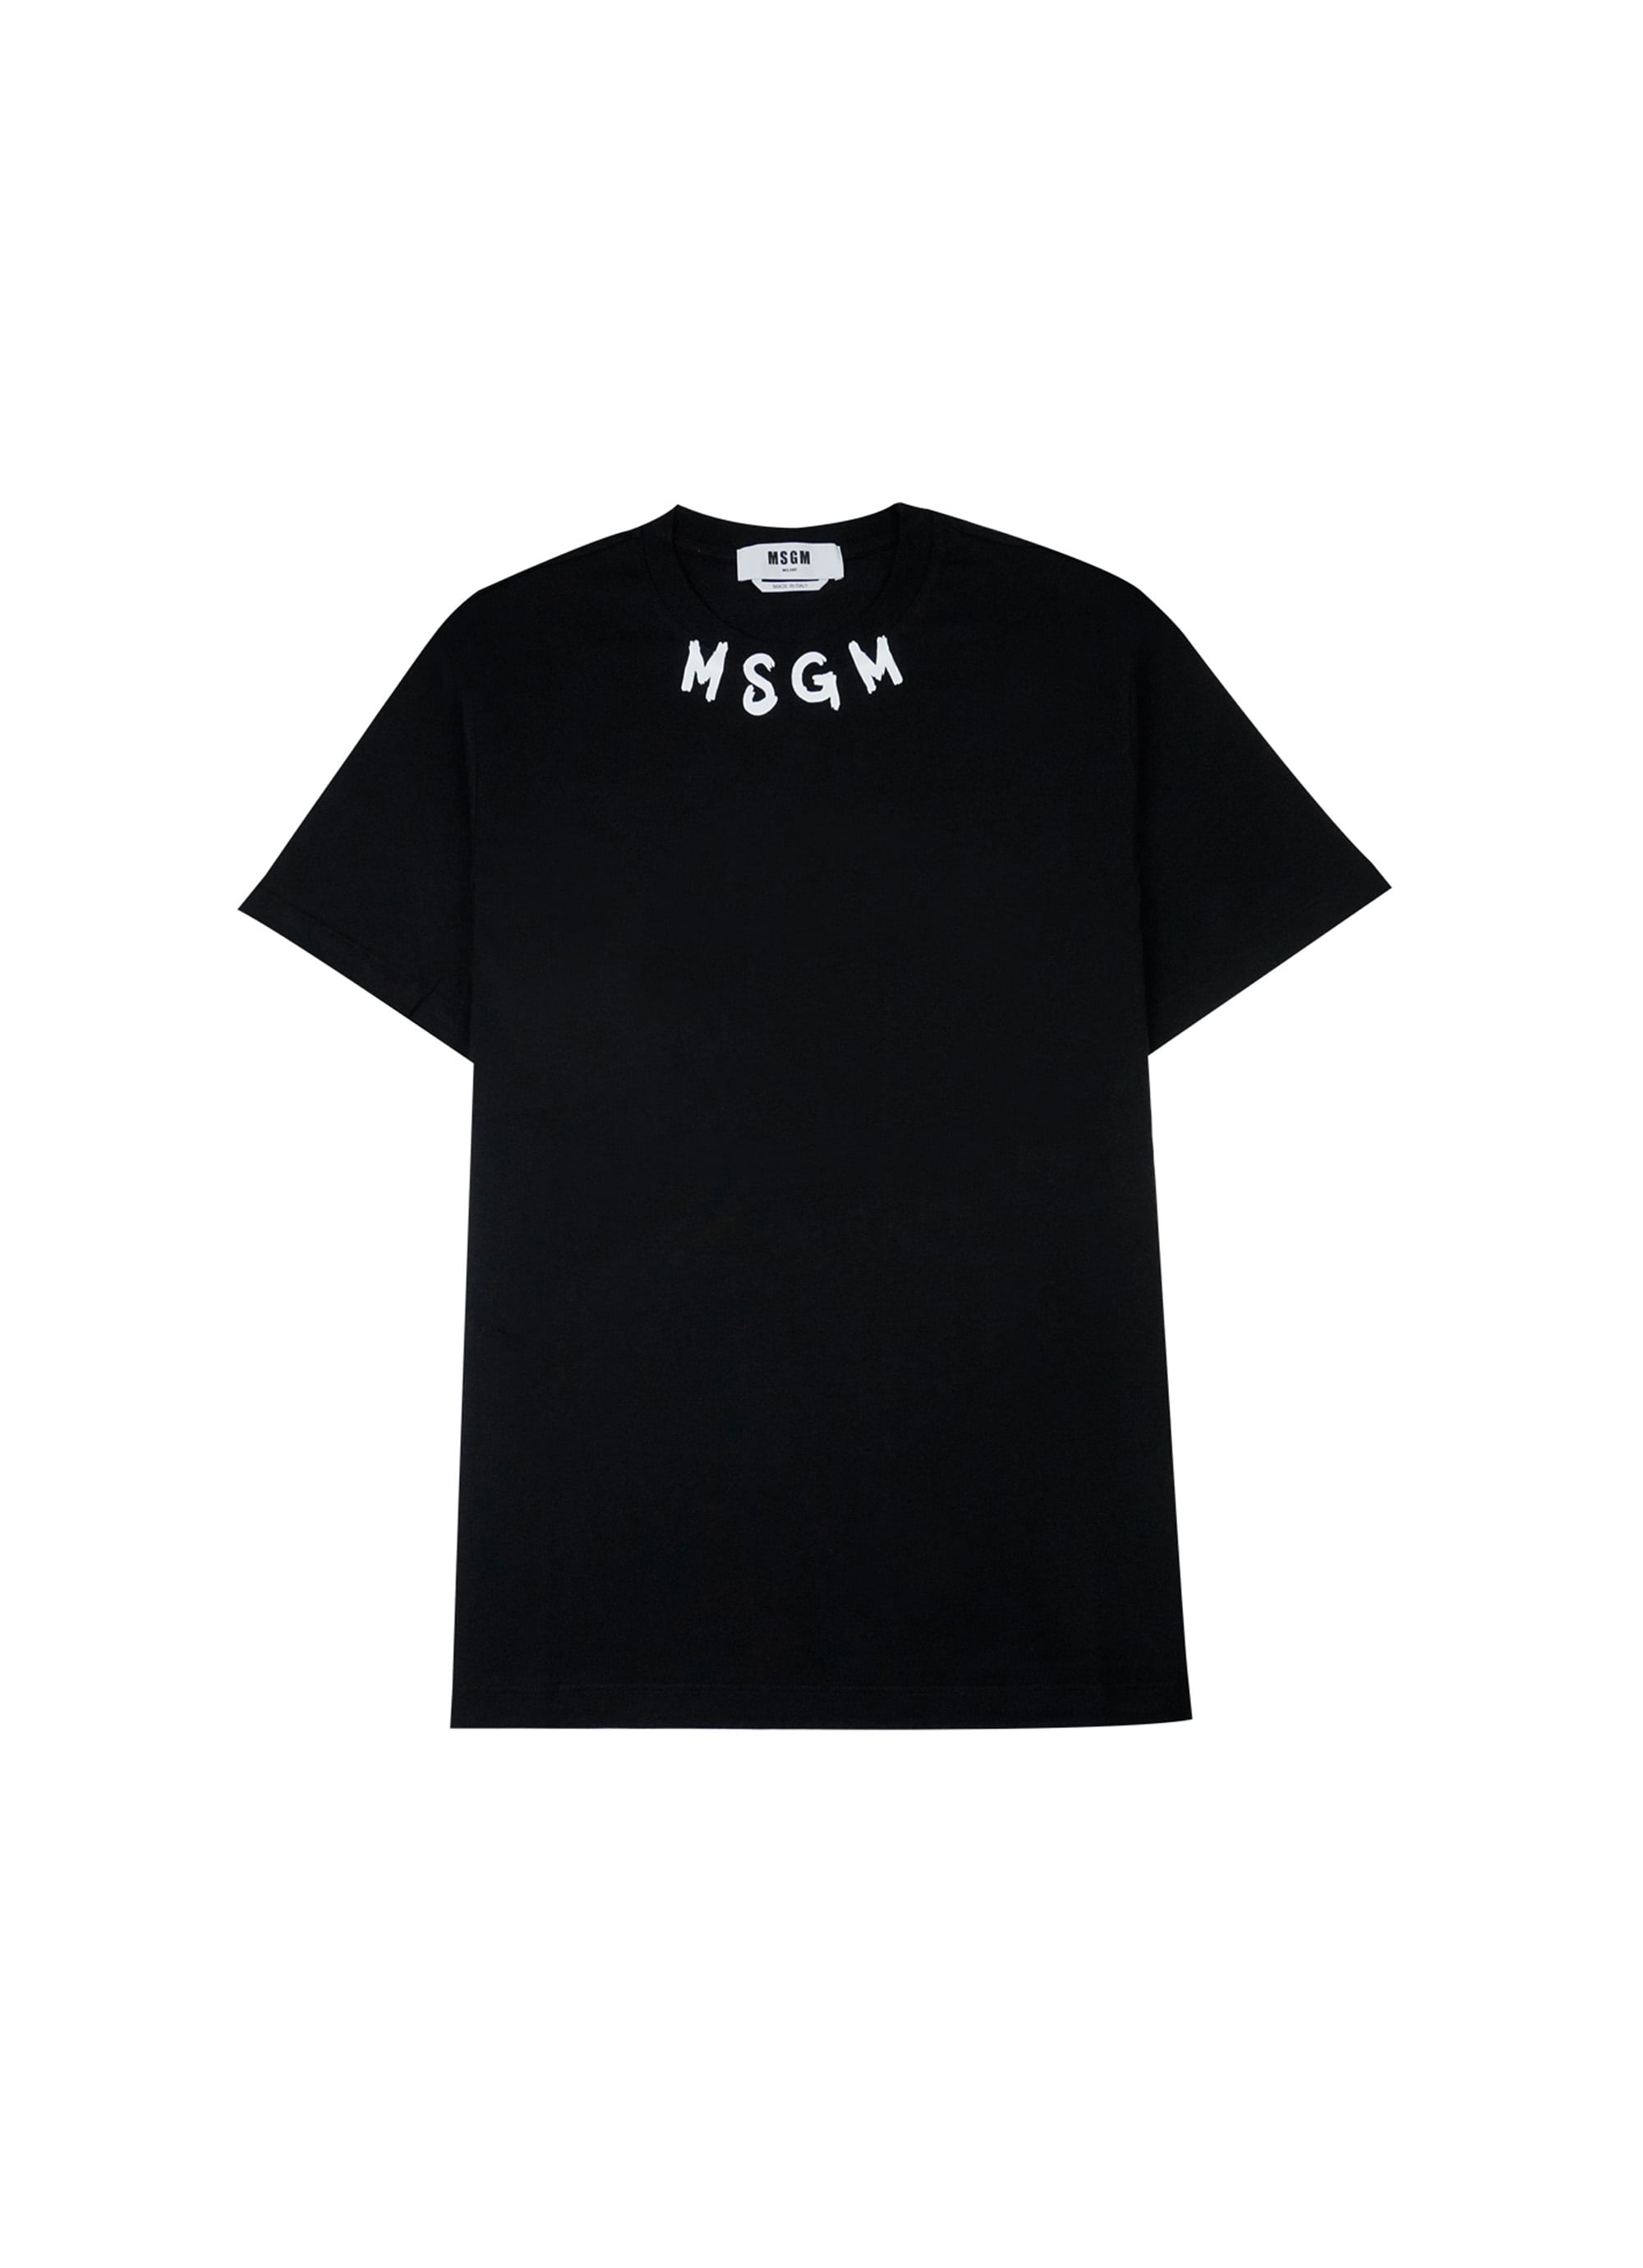 MSGM NEWブラッシュストロークロゴTシャツ 詳細画像 ブラック 1